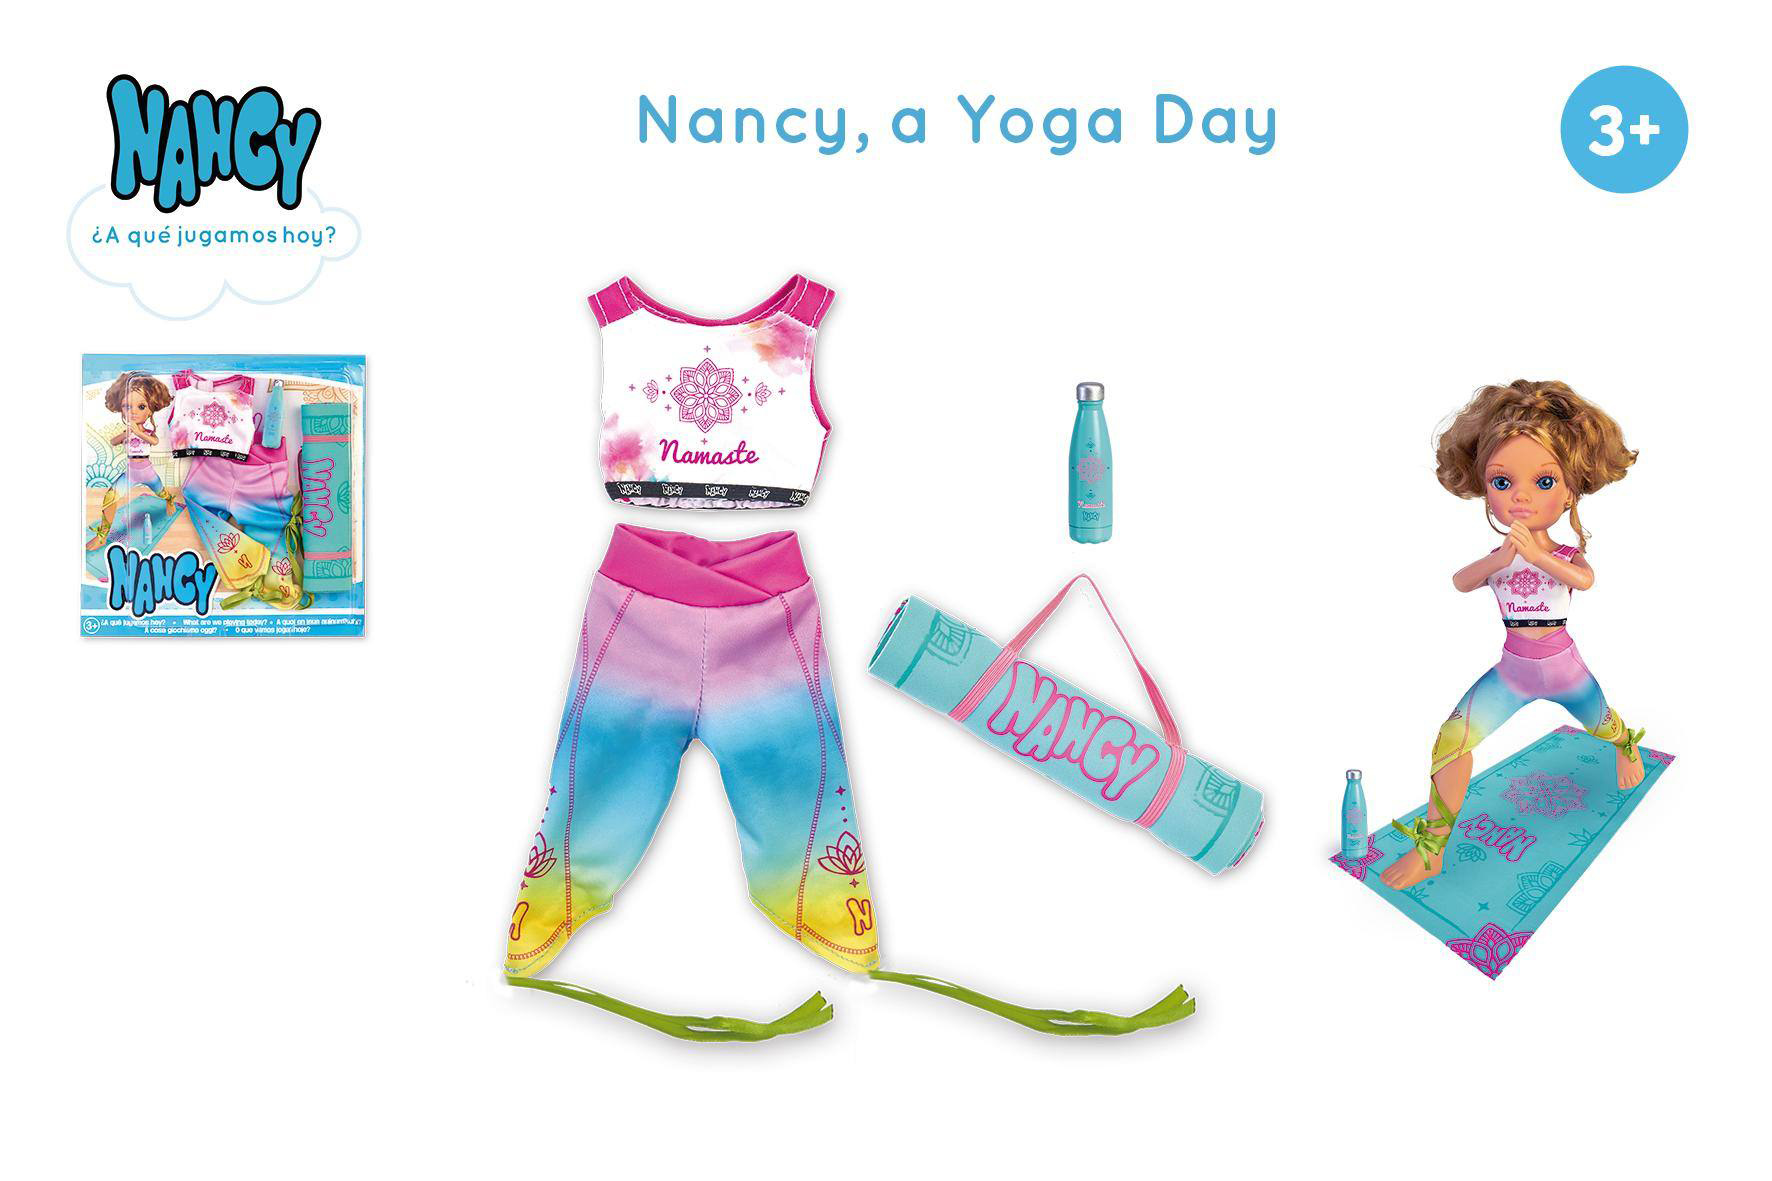 nancy un día de yoga ( famosa - nac28000)